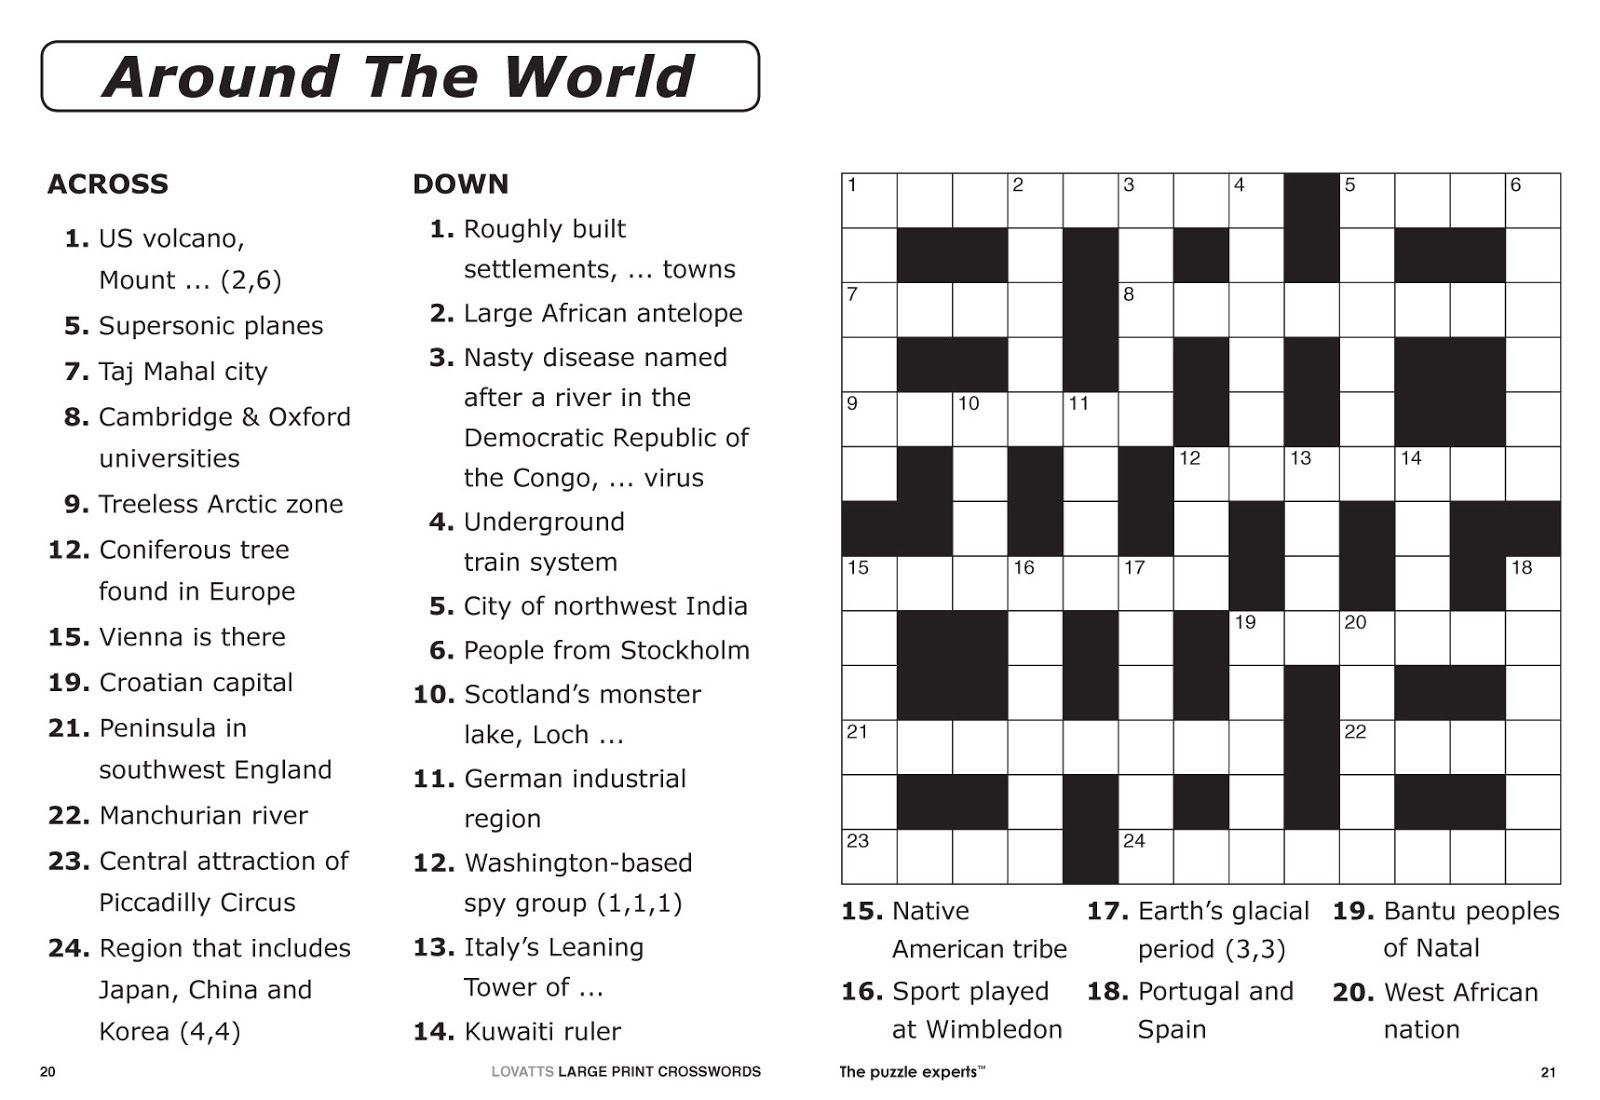 Free Printable Large Print Crossword Puzzles | M3U8 - Large Print Crossword Puzzle Dictionary